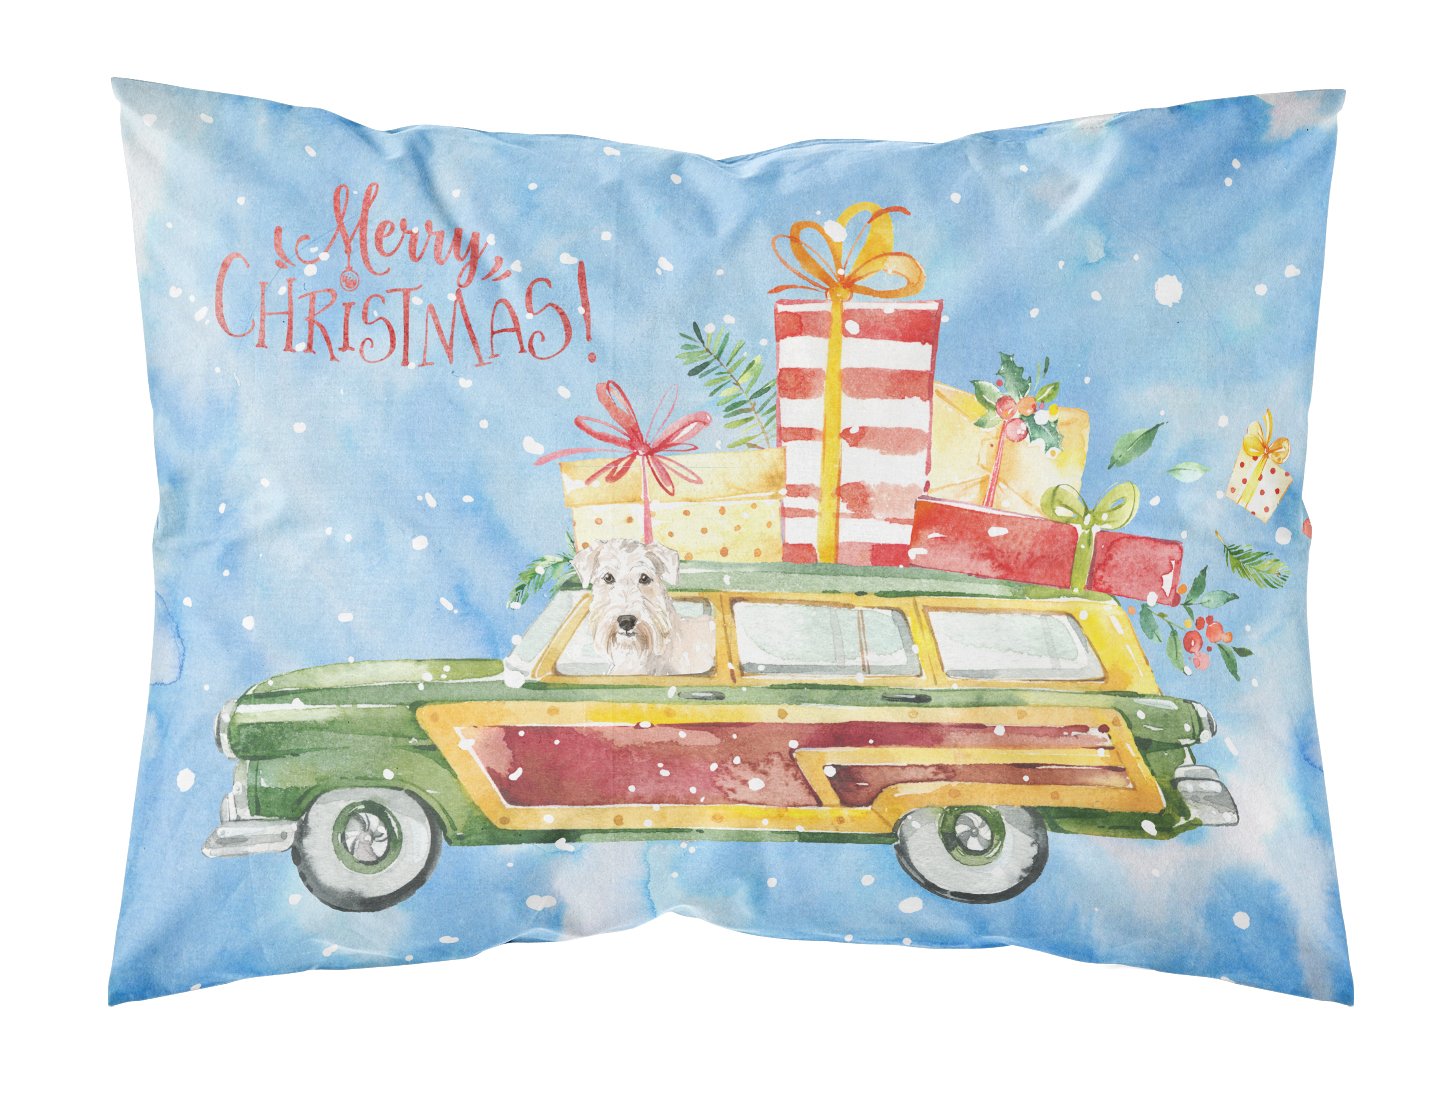 Merry Christmas Wheaten Terrier Fabric Standard Pillowcase CK2428PILLOWCASE by Caroline's Treasures